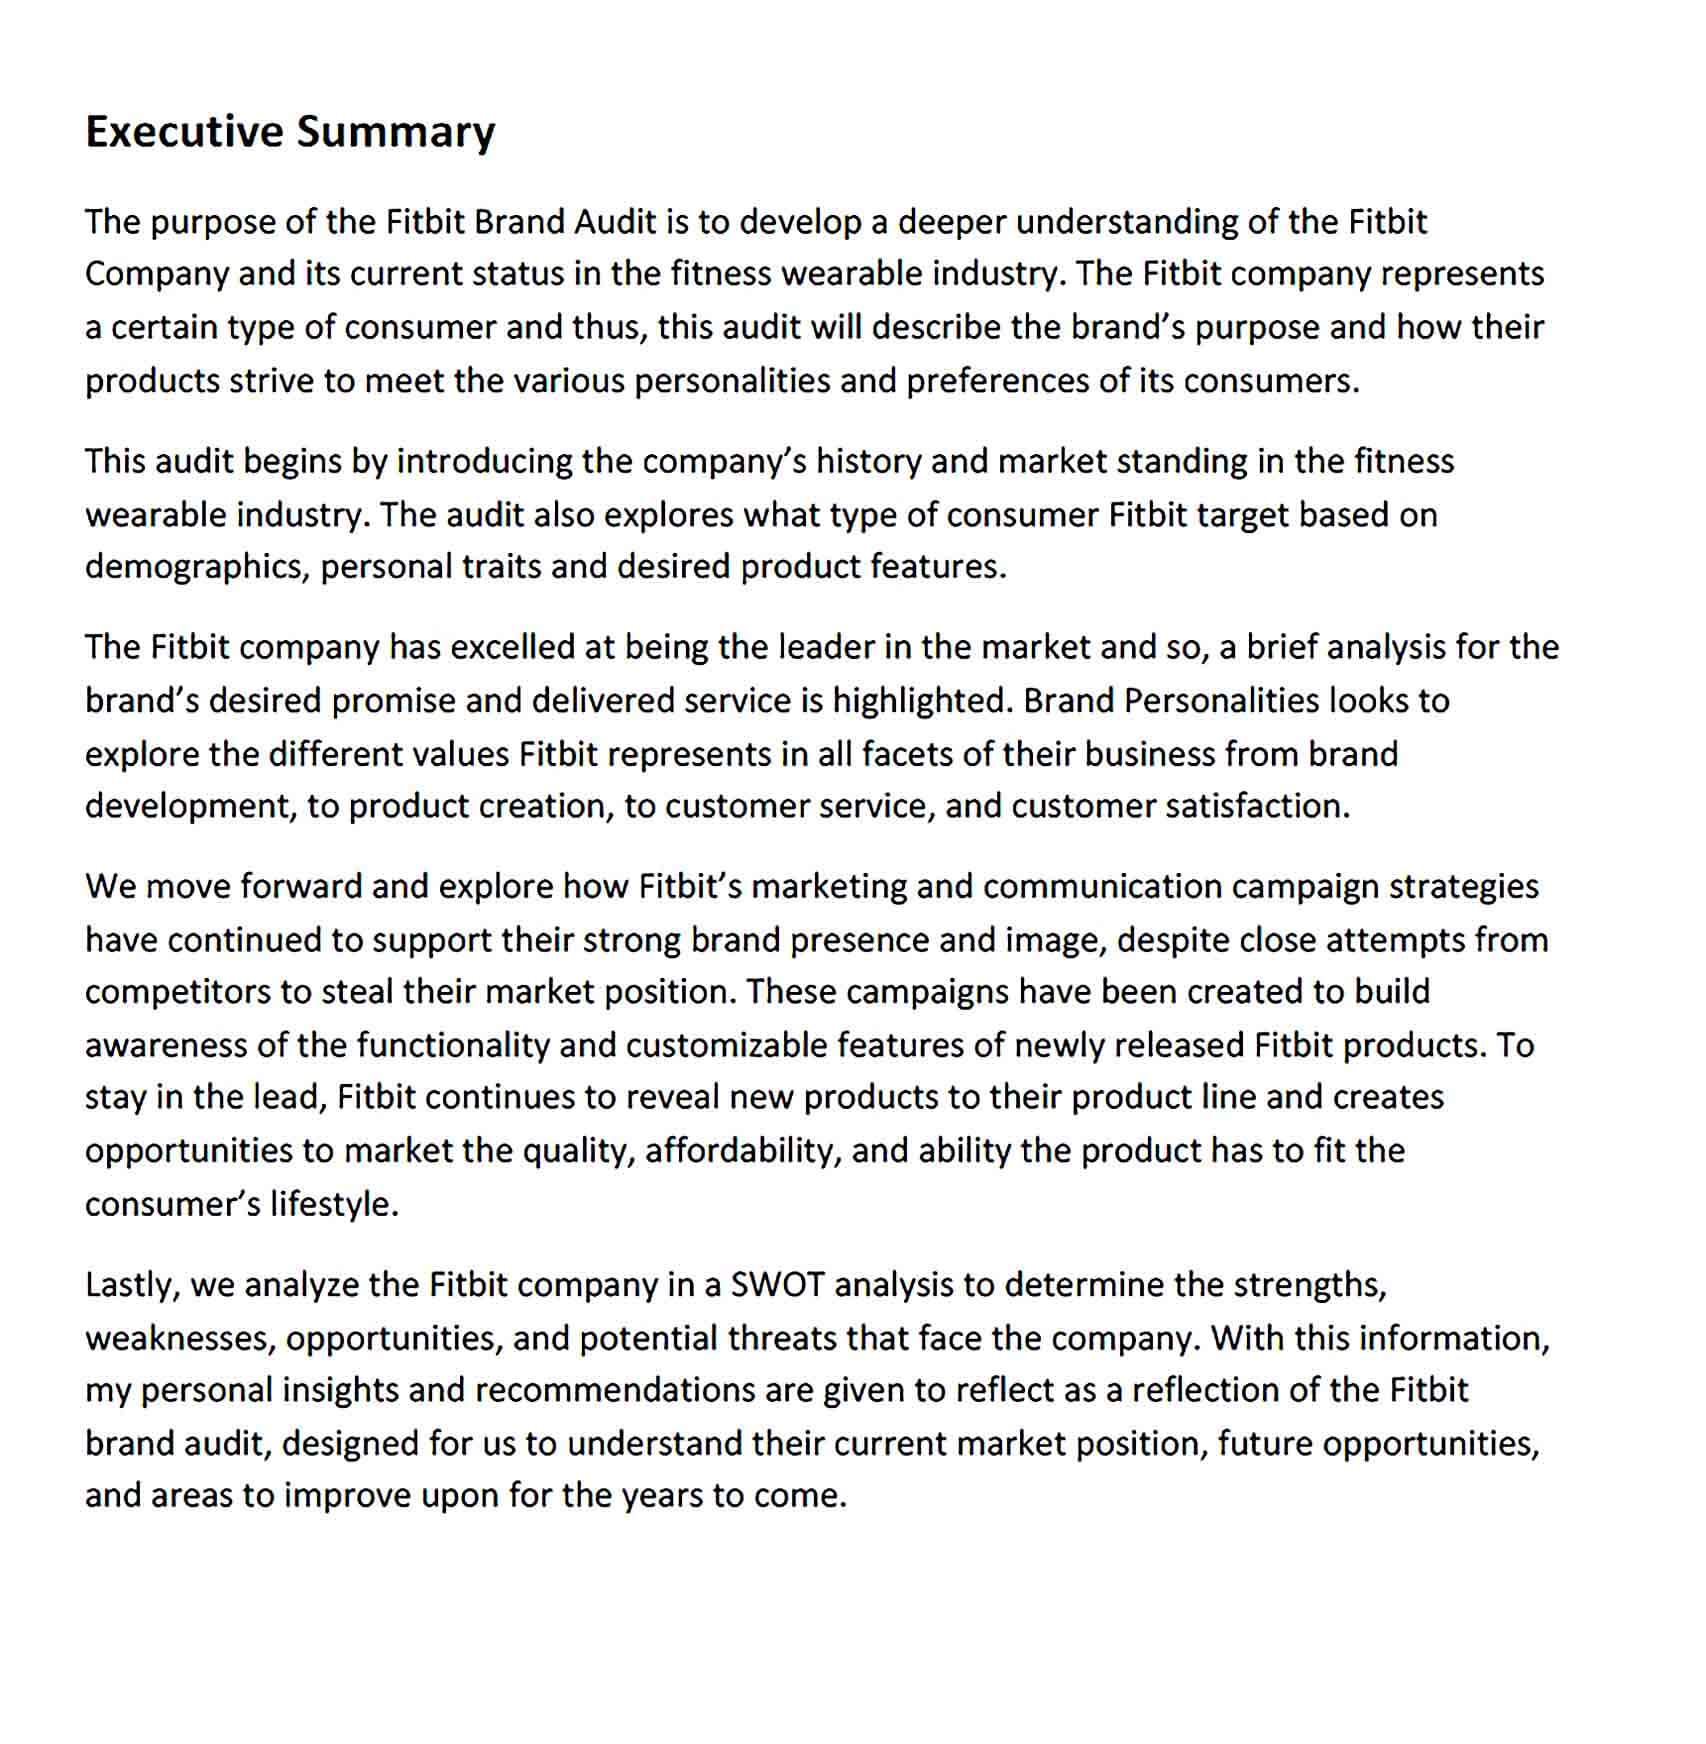 Sample Fitbit Brand Audit Report